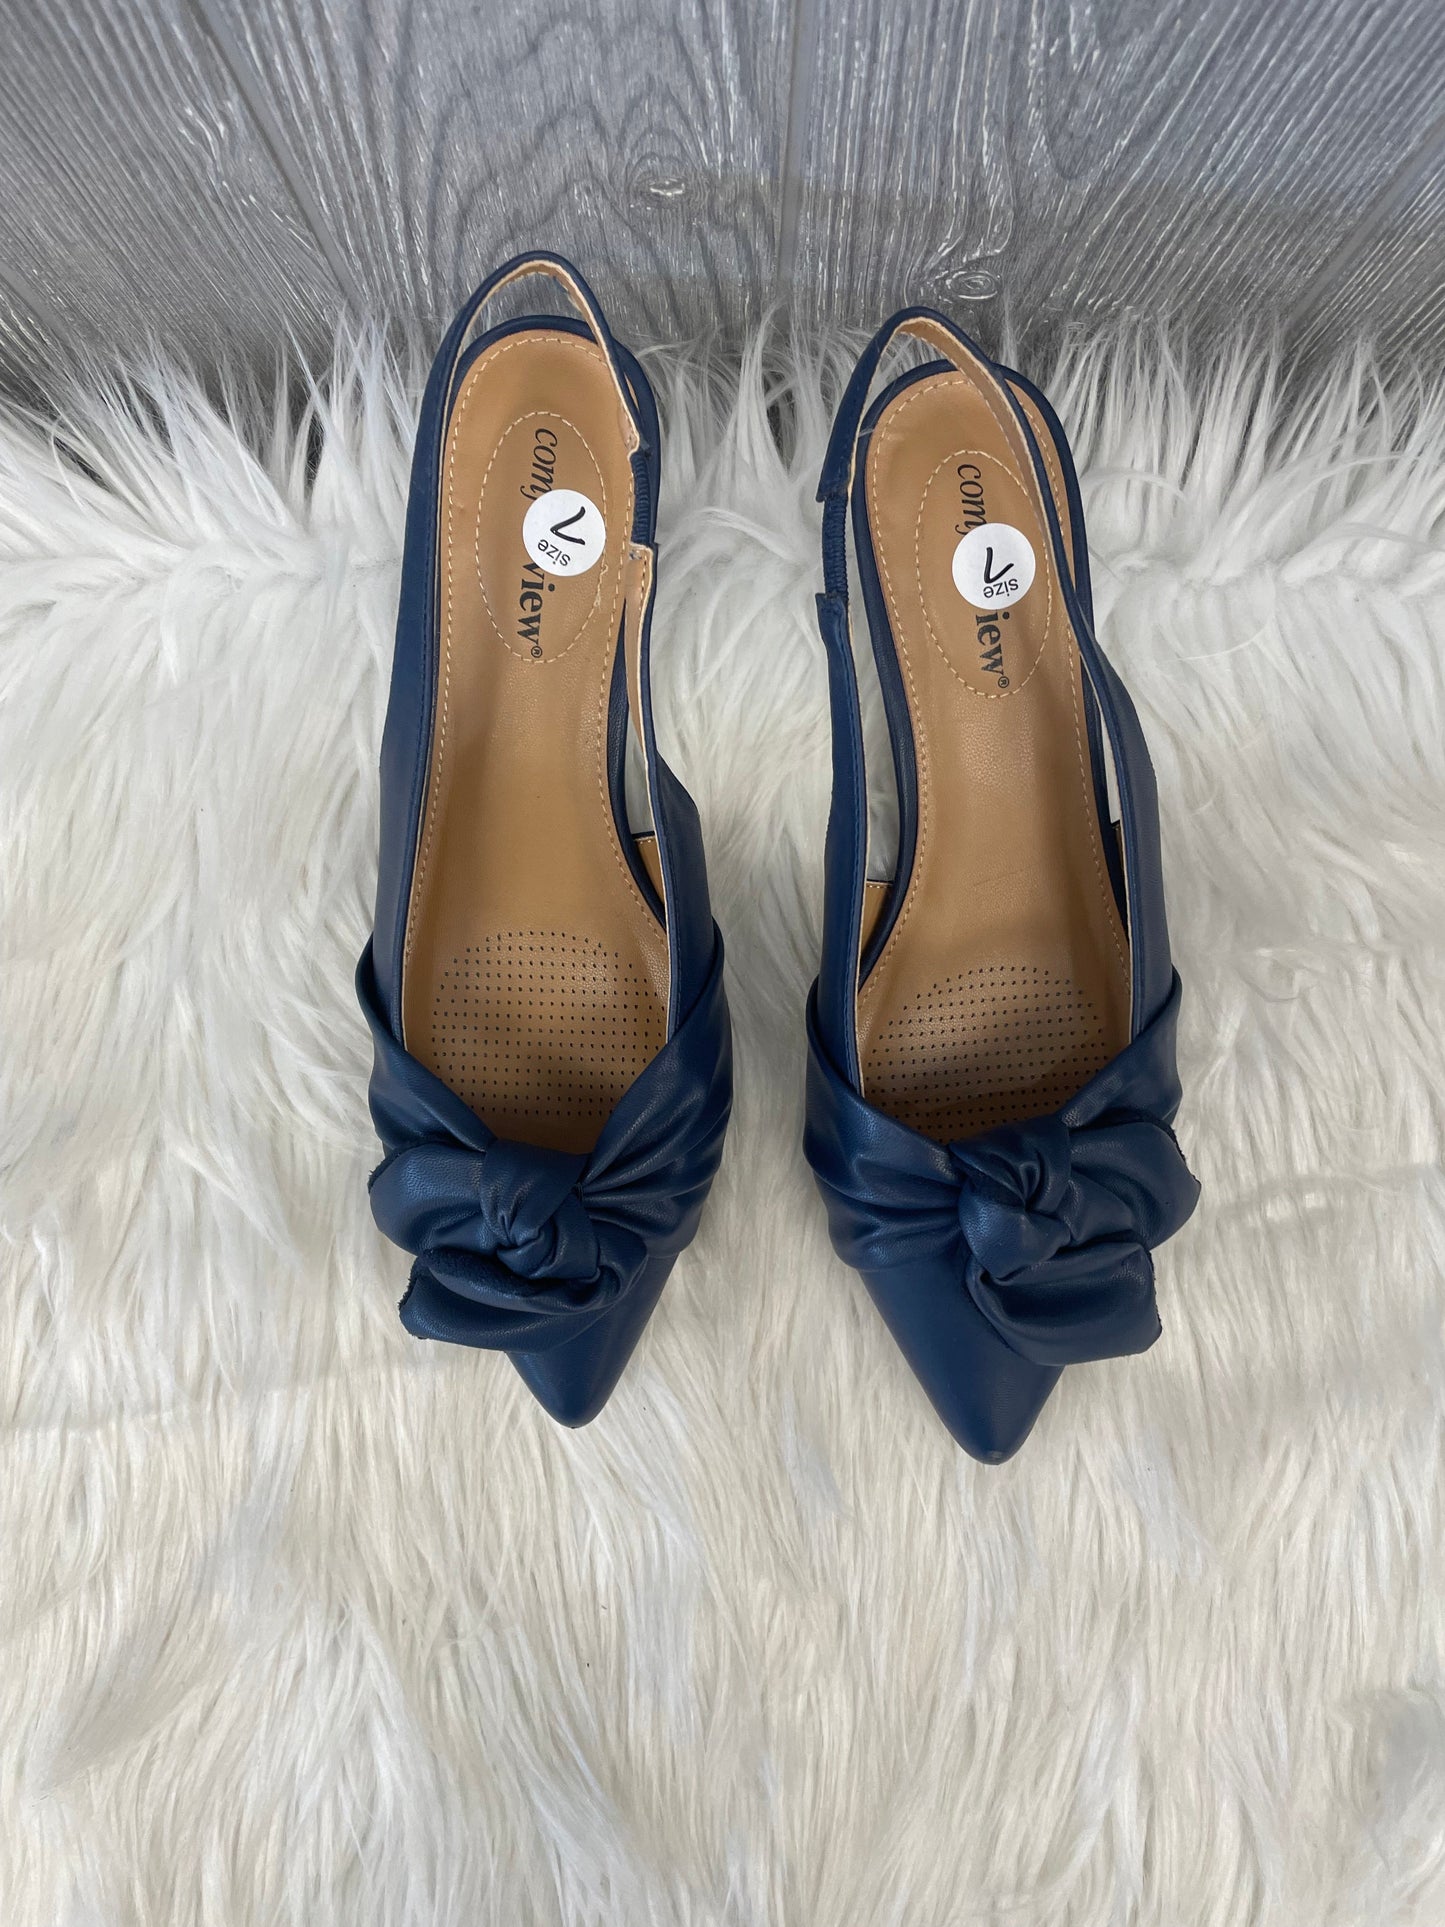 Blue Shoes Heels Stiletto Clothes Mentor, Size 7